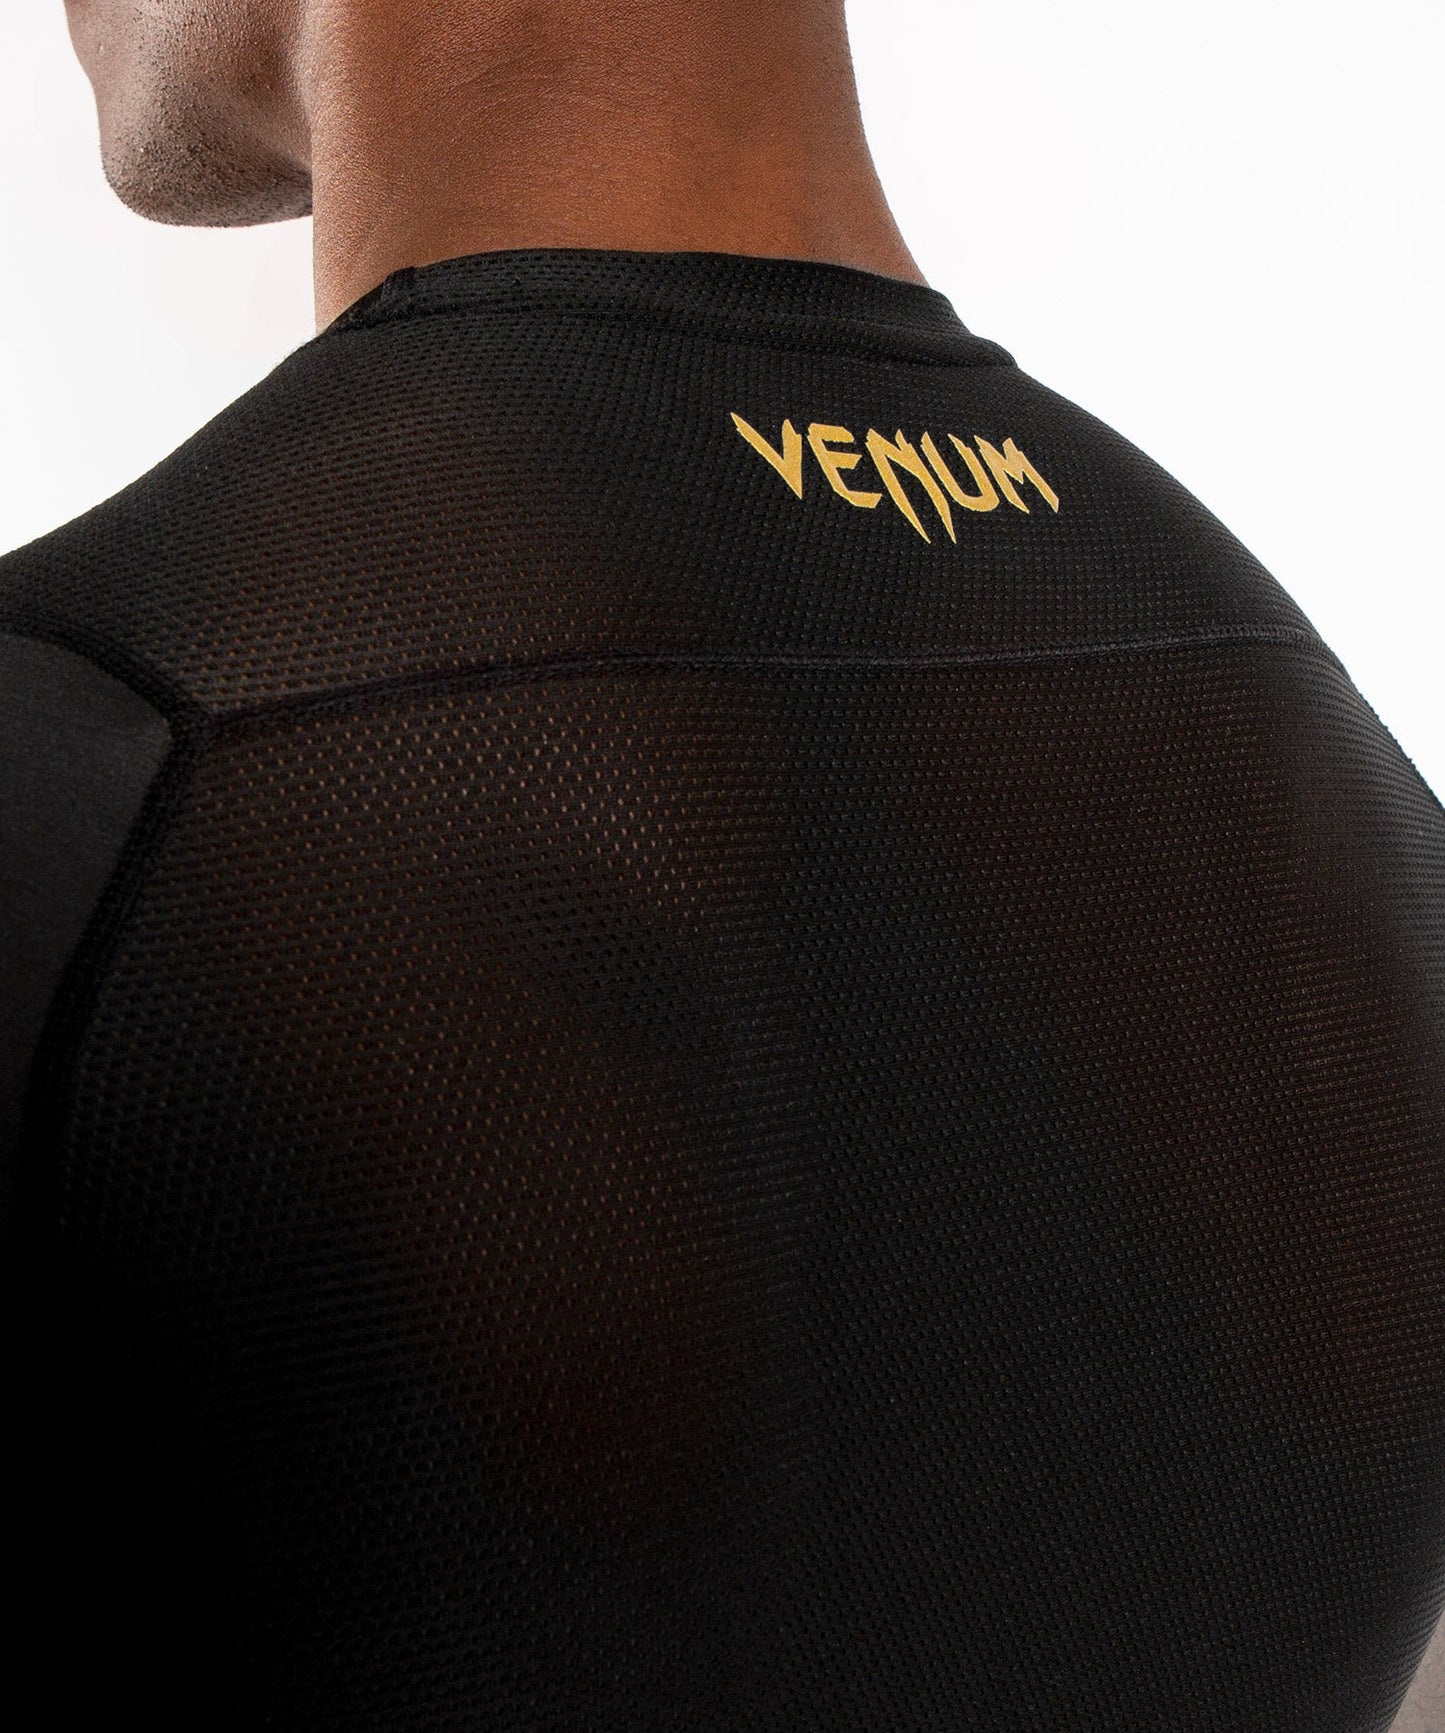 Venum G-Fit Rashguard - Short Sleeves - Black/Gold